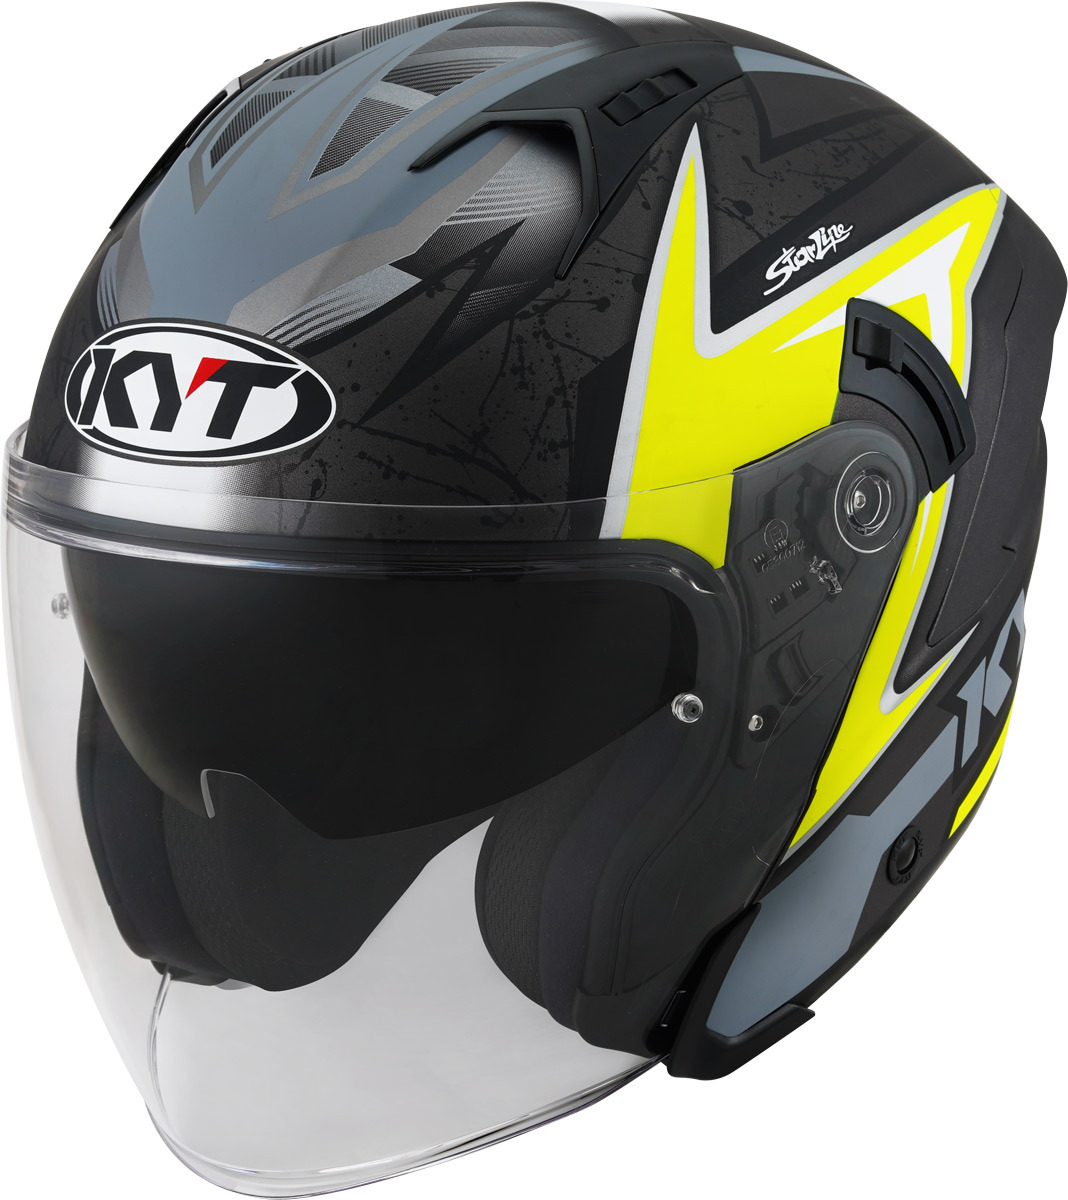 KYT NF-J Attitude Jet Helmet, black-yellow, Size L, L Black Yellow unisex